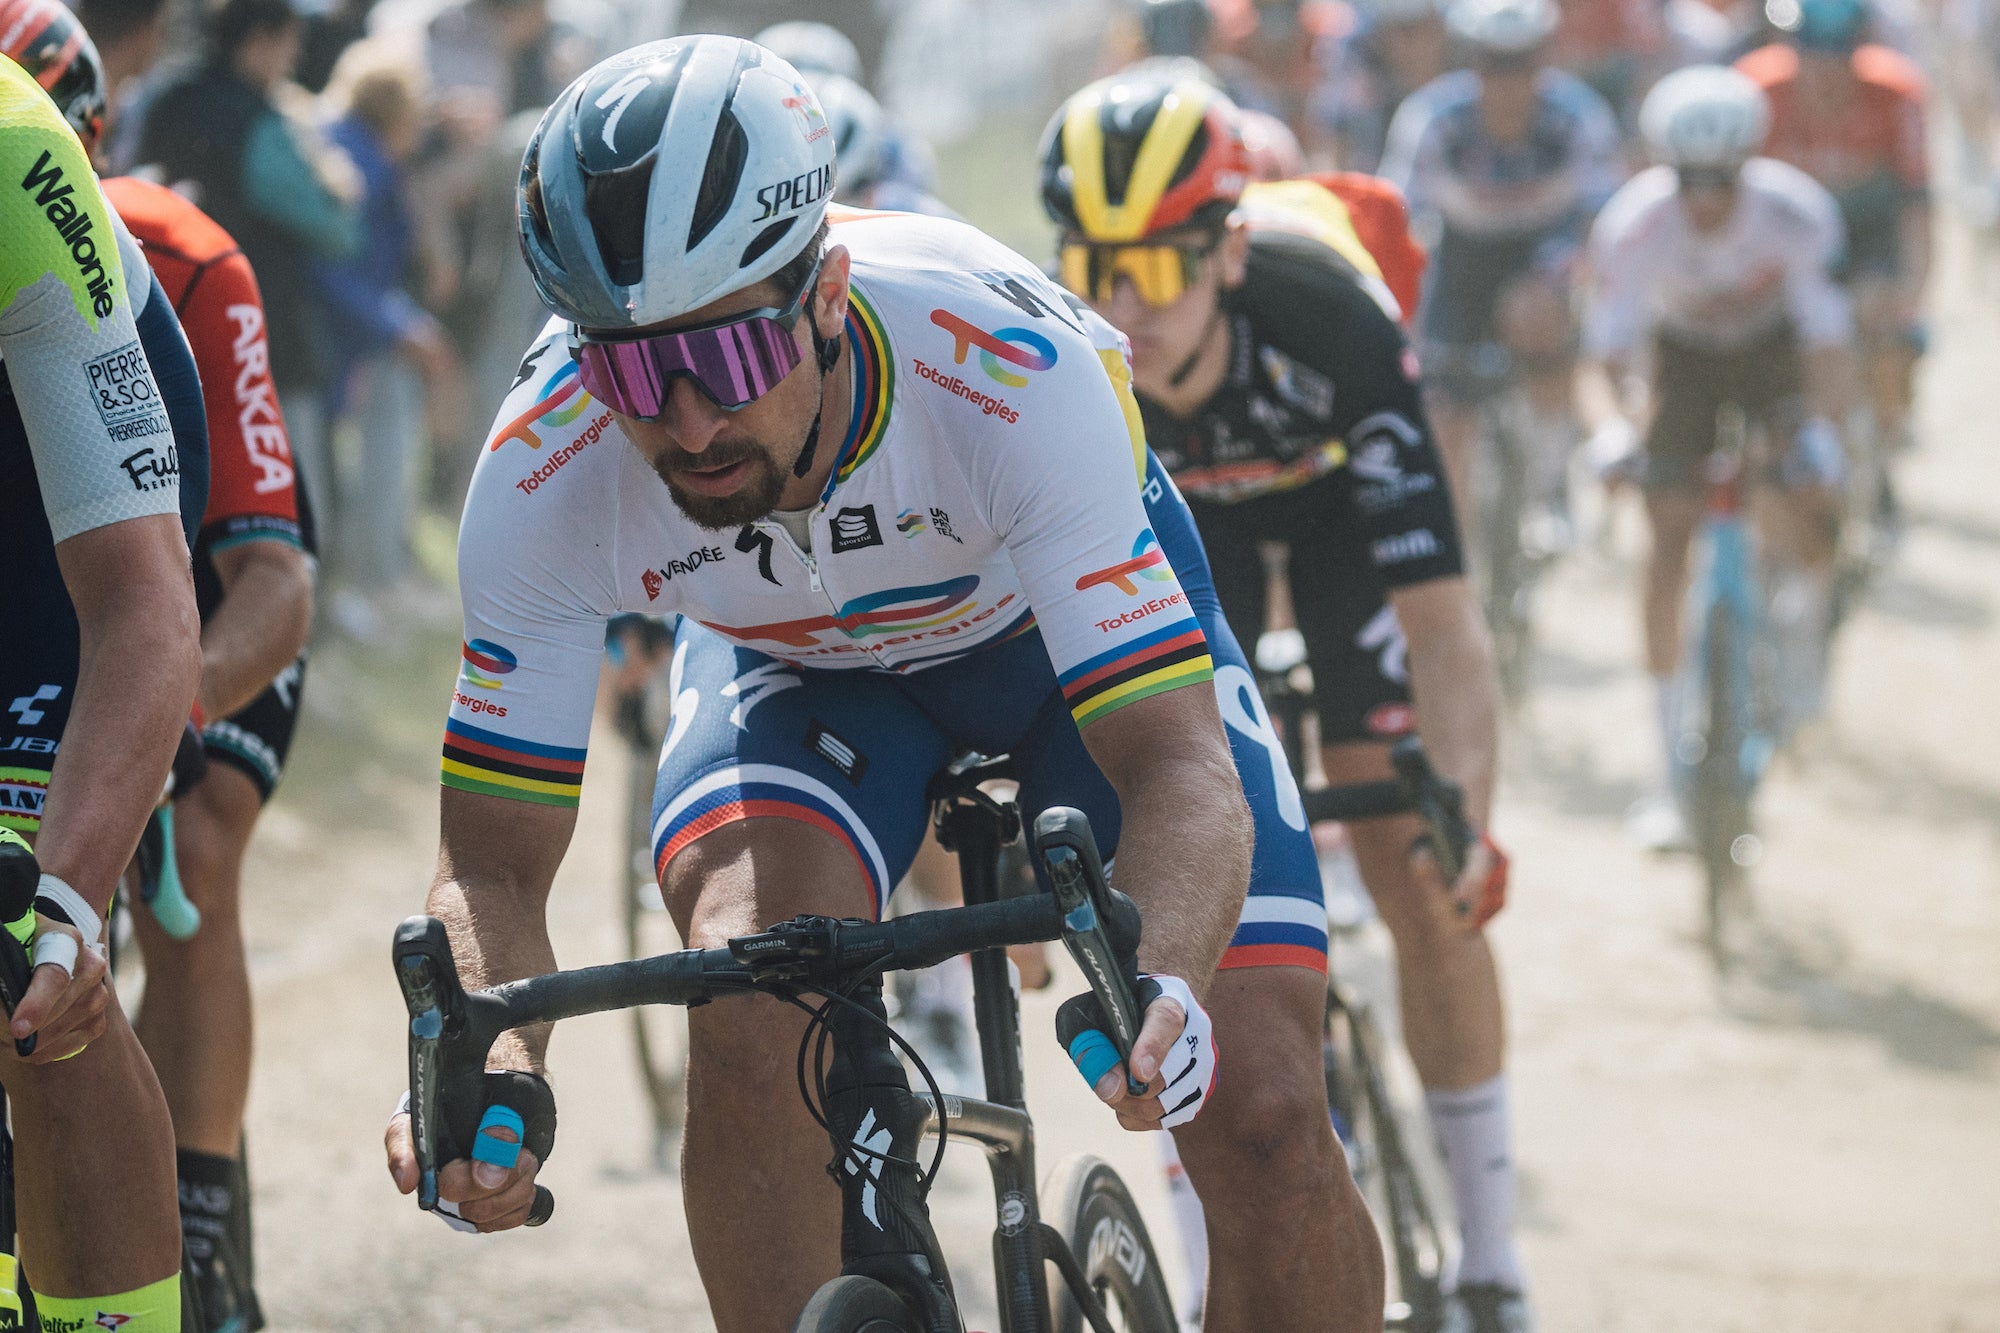 Peter Sagan pivots to Tour de France after Paris-Roubaix crash